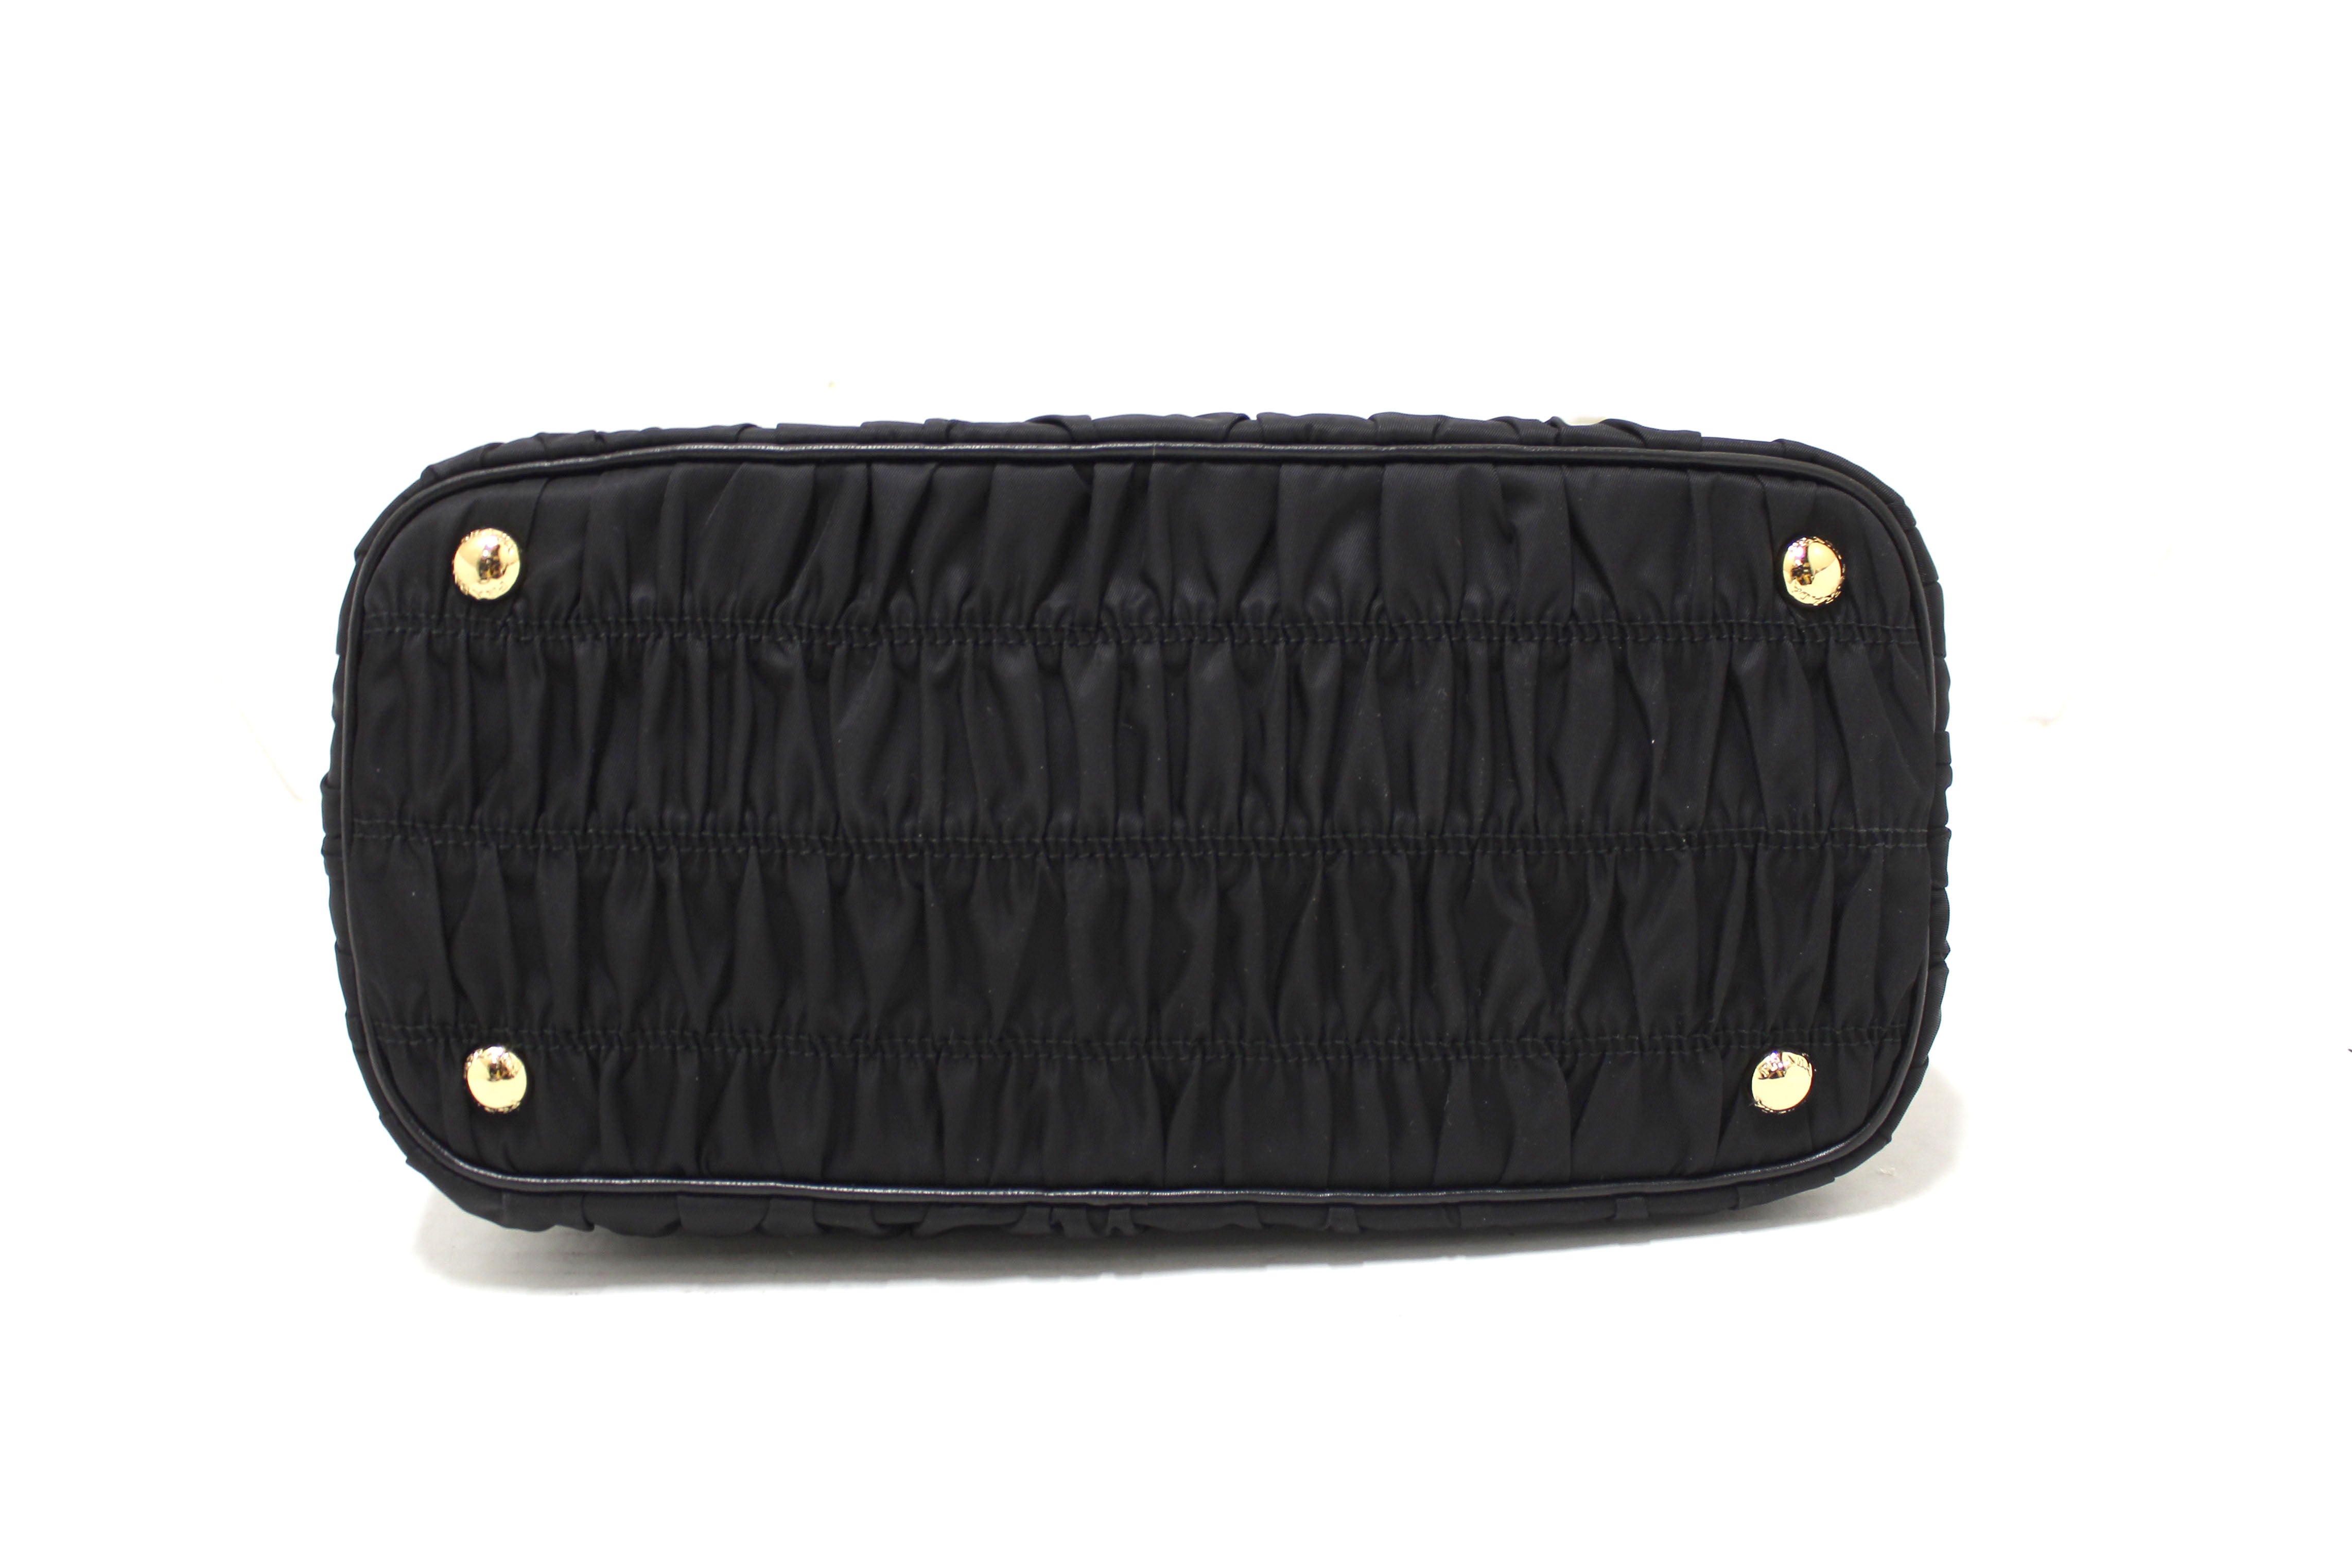 NEW Authentic Prada Black Nylon Gaufre Small Tote Crossbody Bag